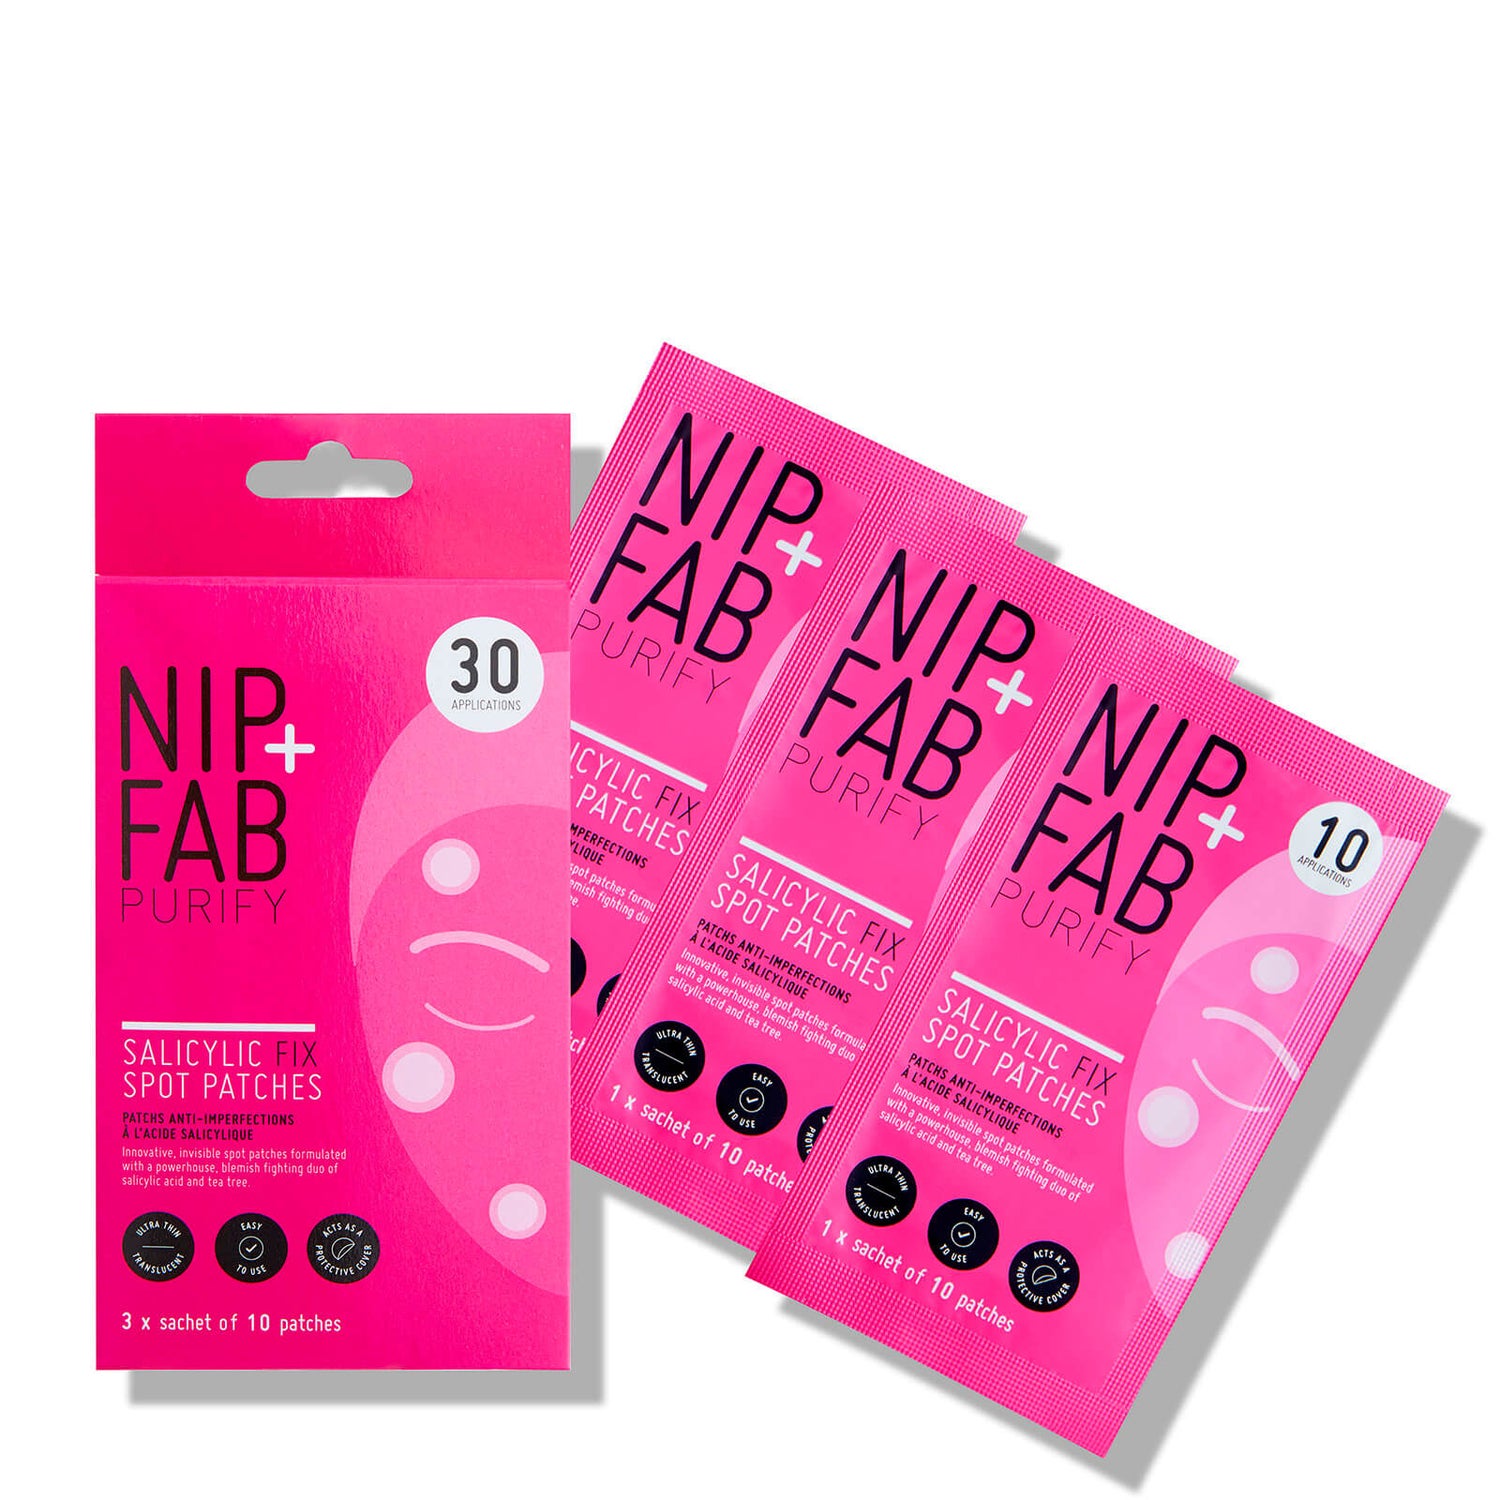 NIP+FAB Salicylic Fix Spot Patches 15g